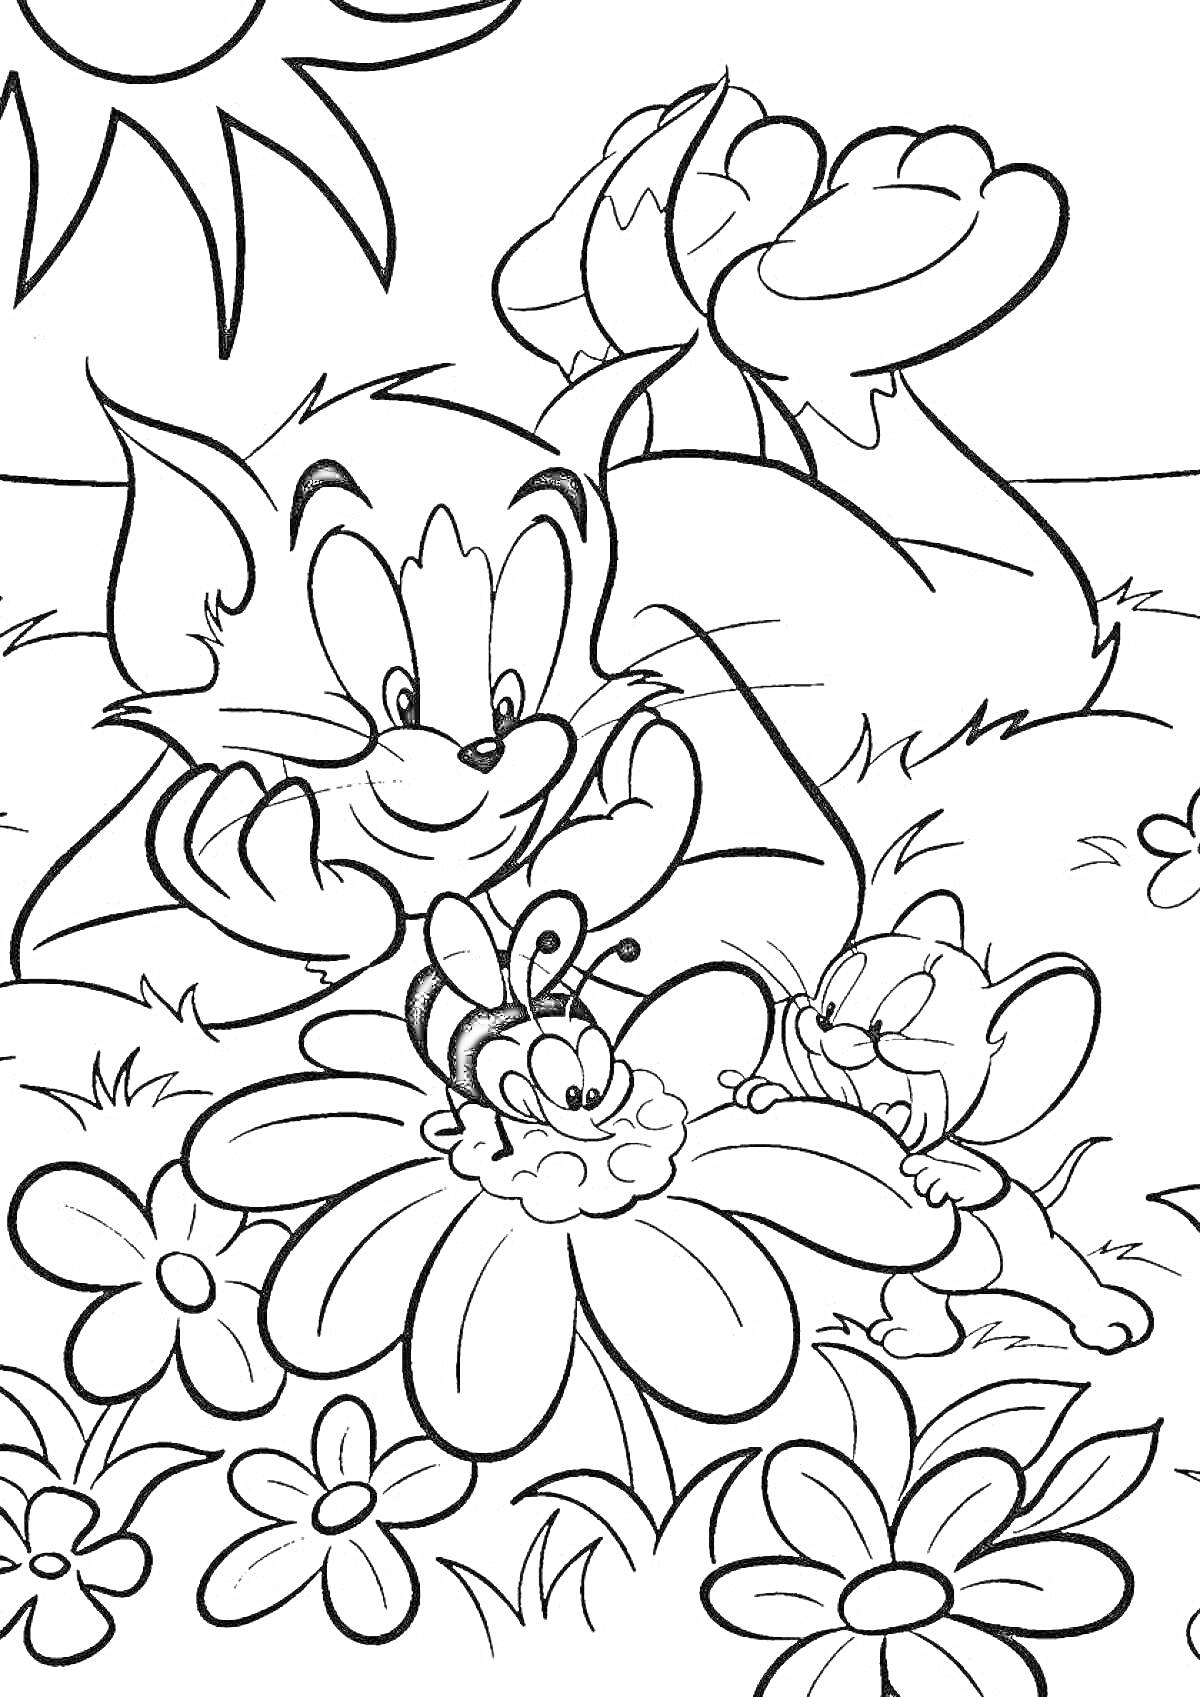 Раскраска Кот, мышонок и пчелка среди цветов